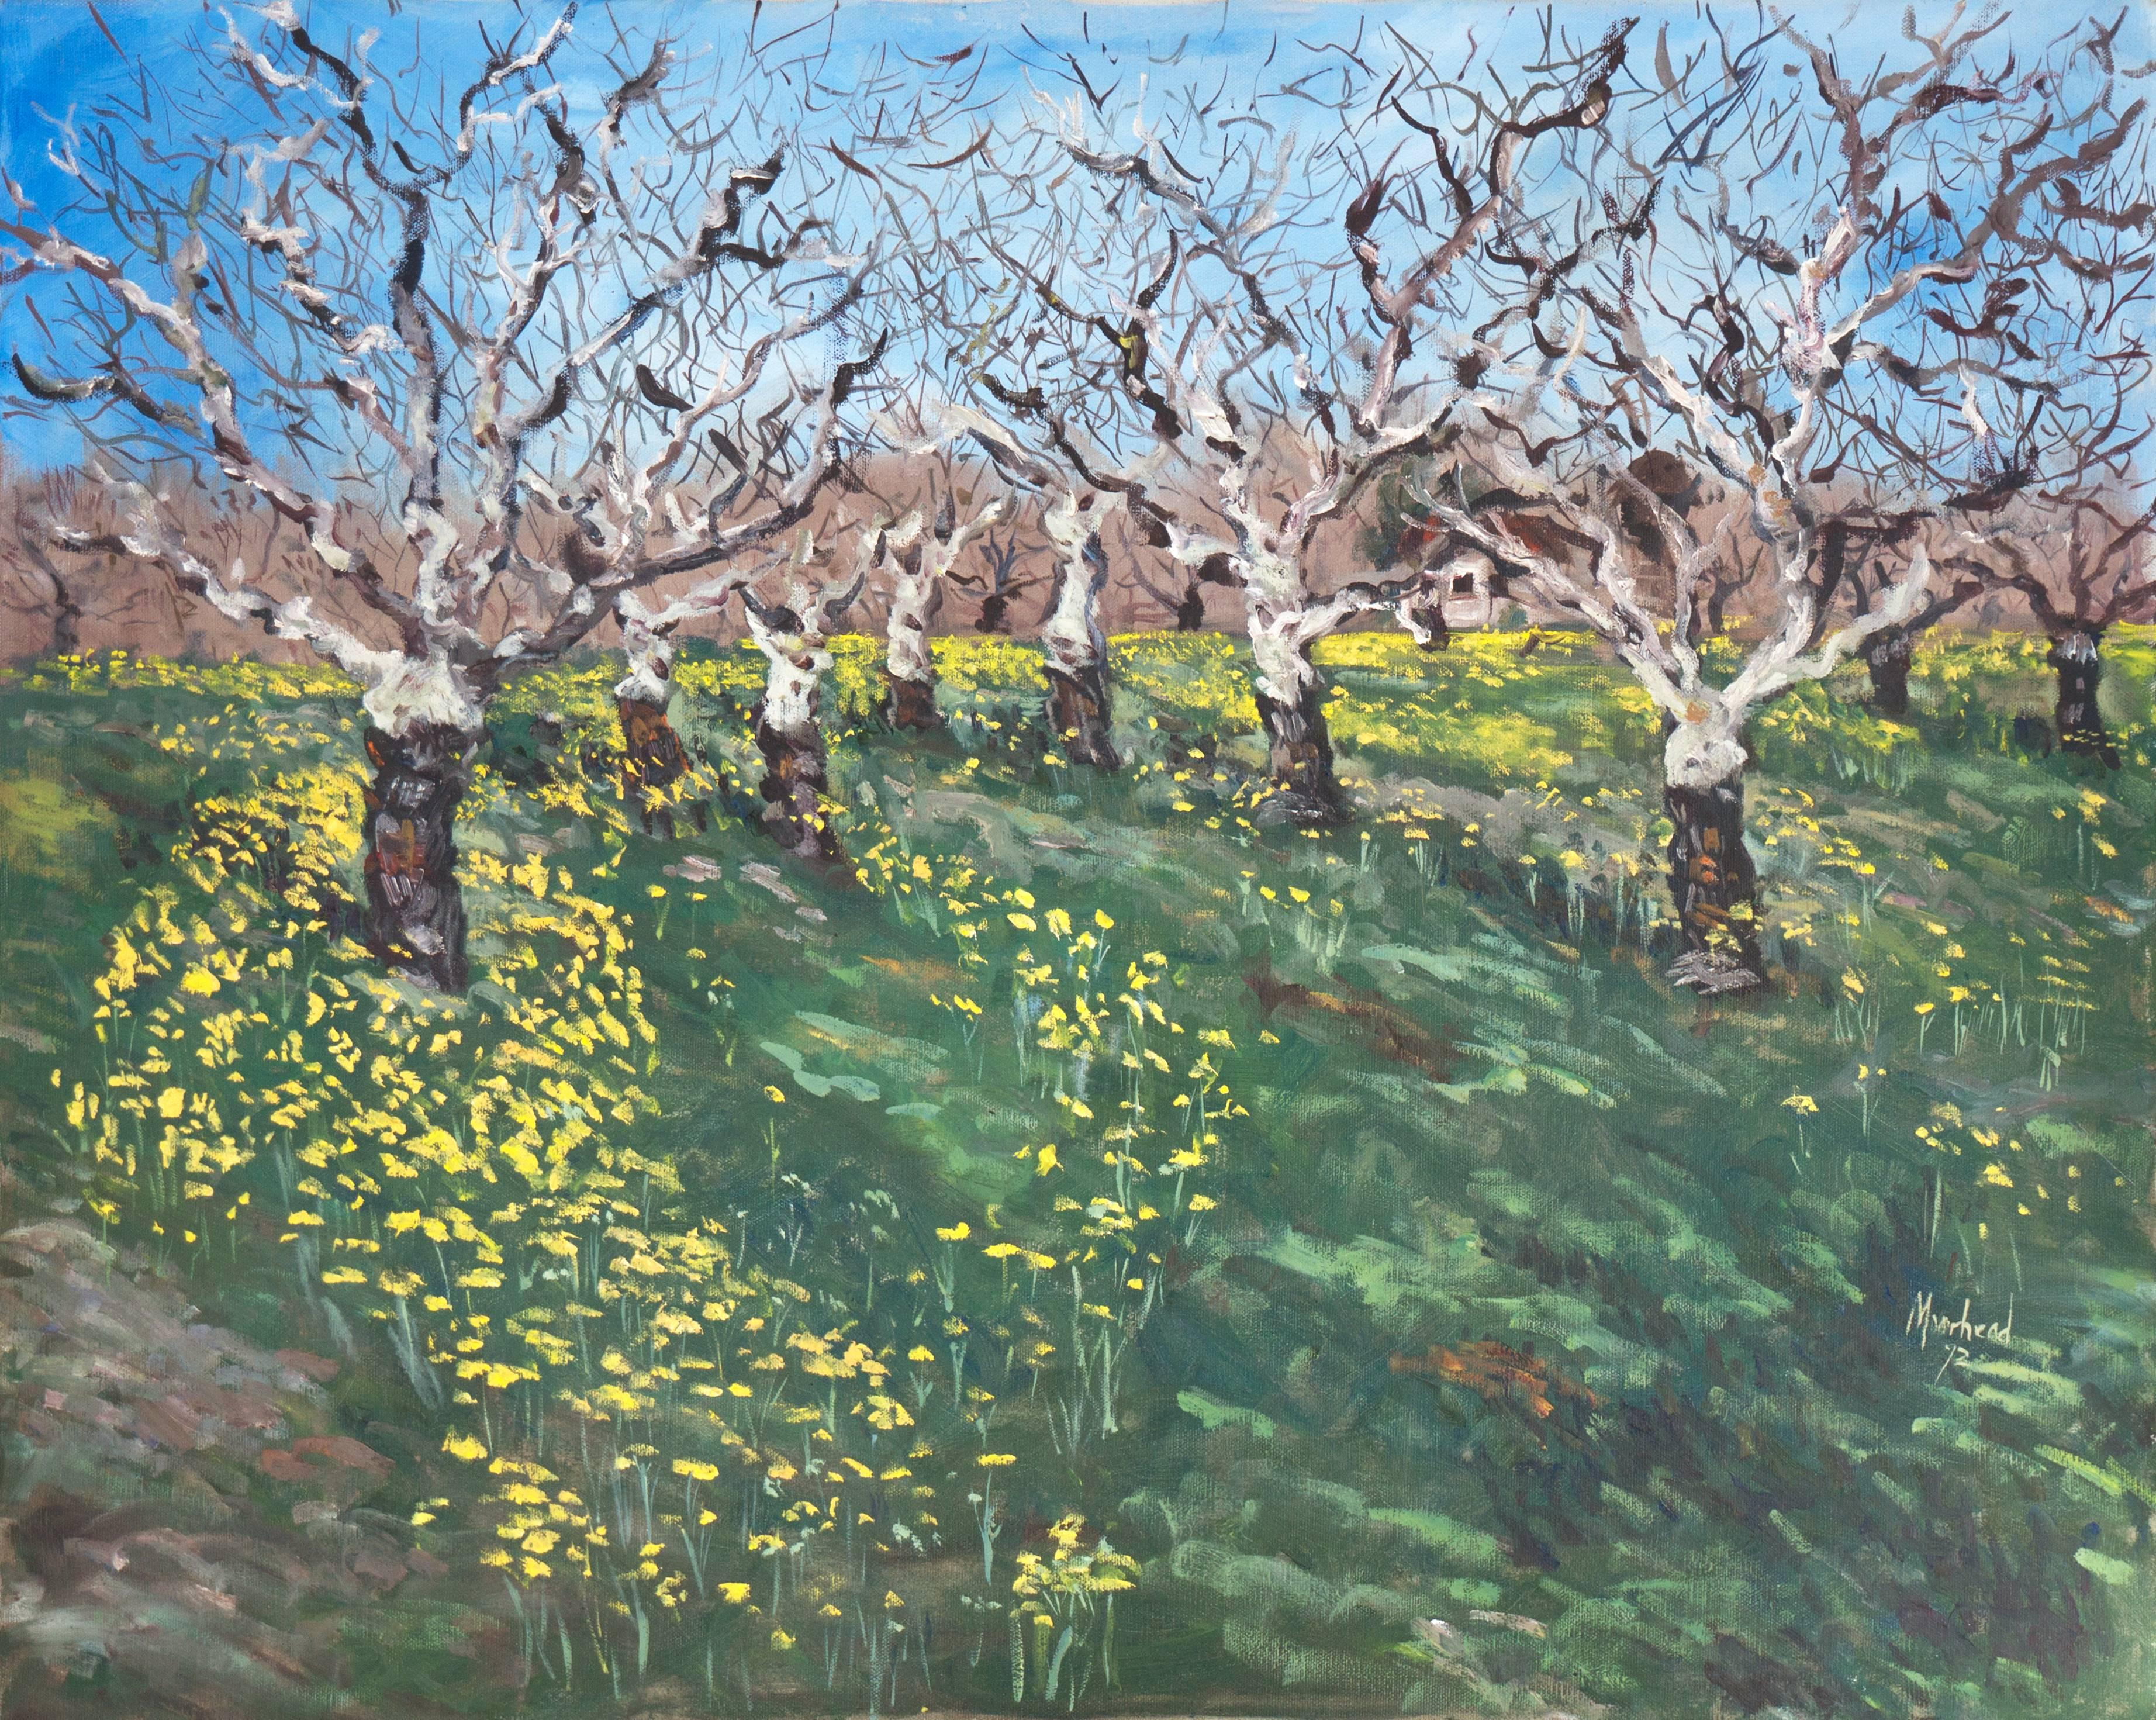 Patricia Moorhead Landscape Painting - 'Walnut Grove with Wild Mustard', California Woman Artist, Large Oil landscape